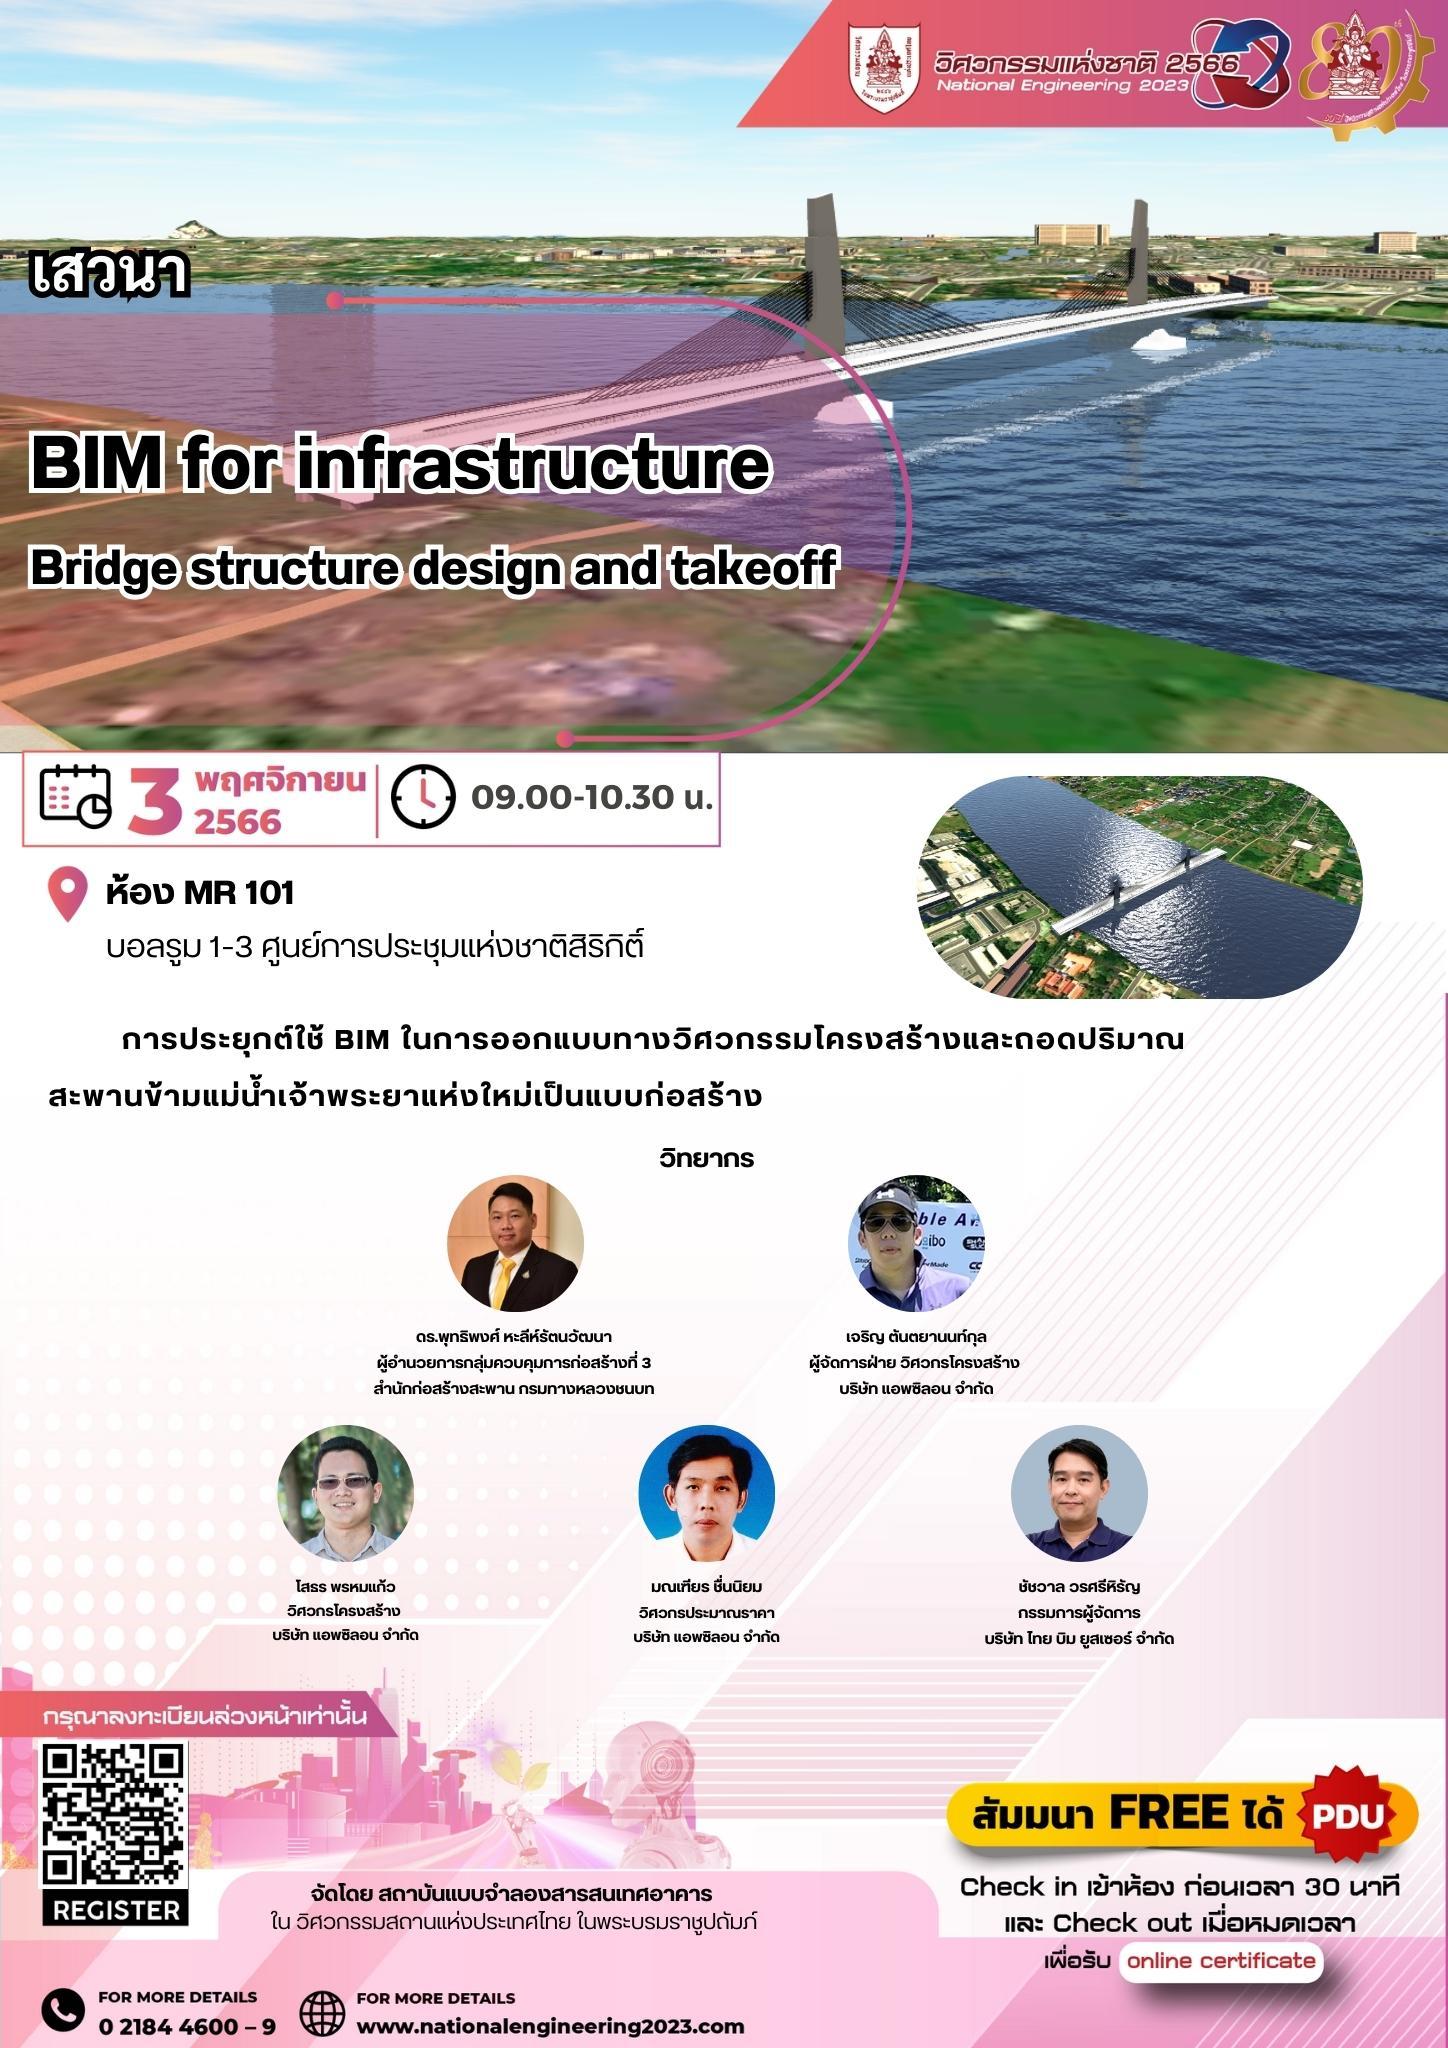 BIM for infrastructure Bridge structure design and takeoff